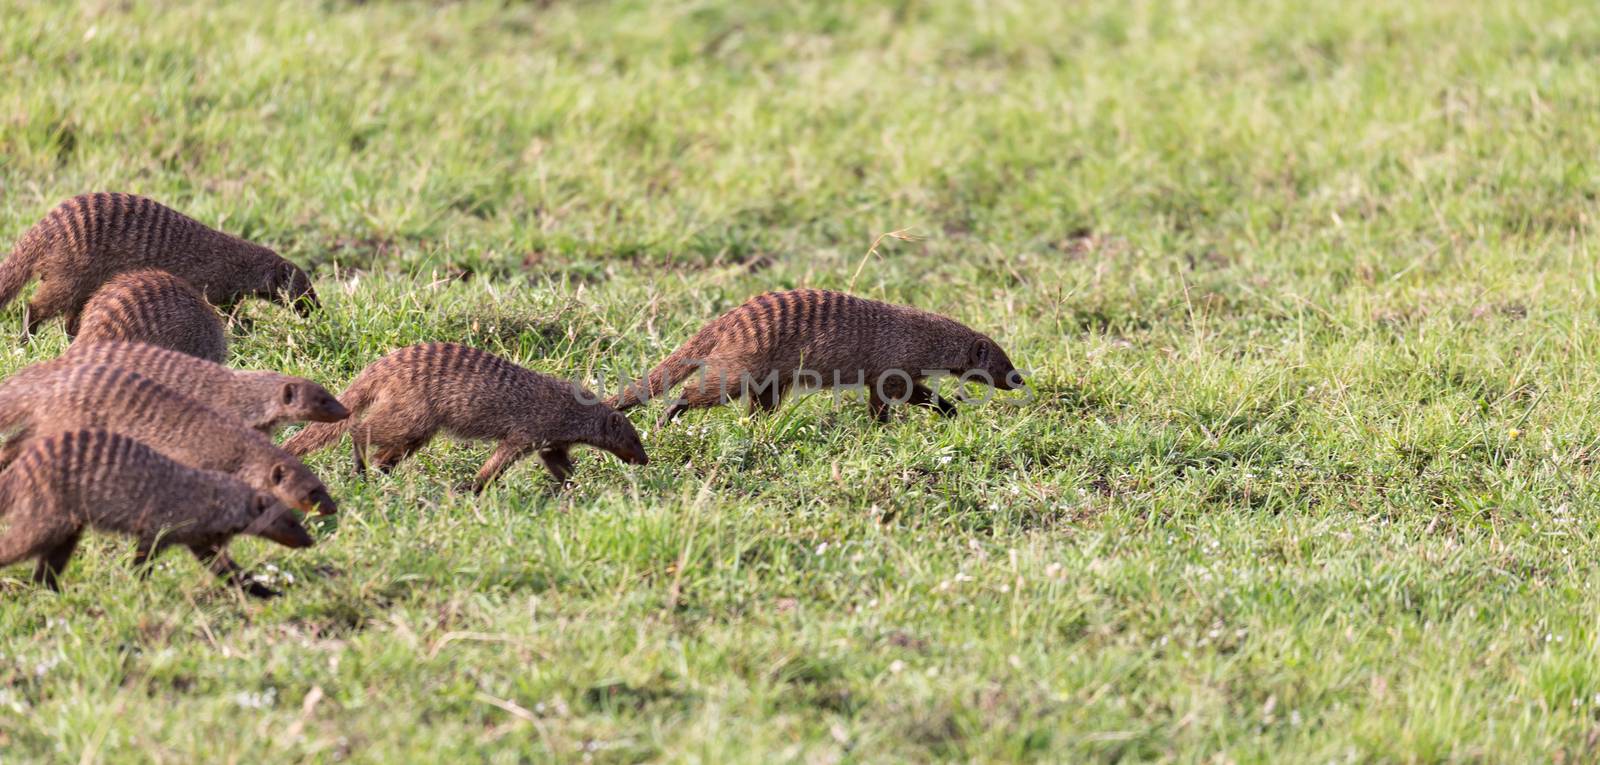 A large horde of mongooses runs through the Kenyan savanna by 25ehaag6